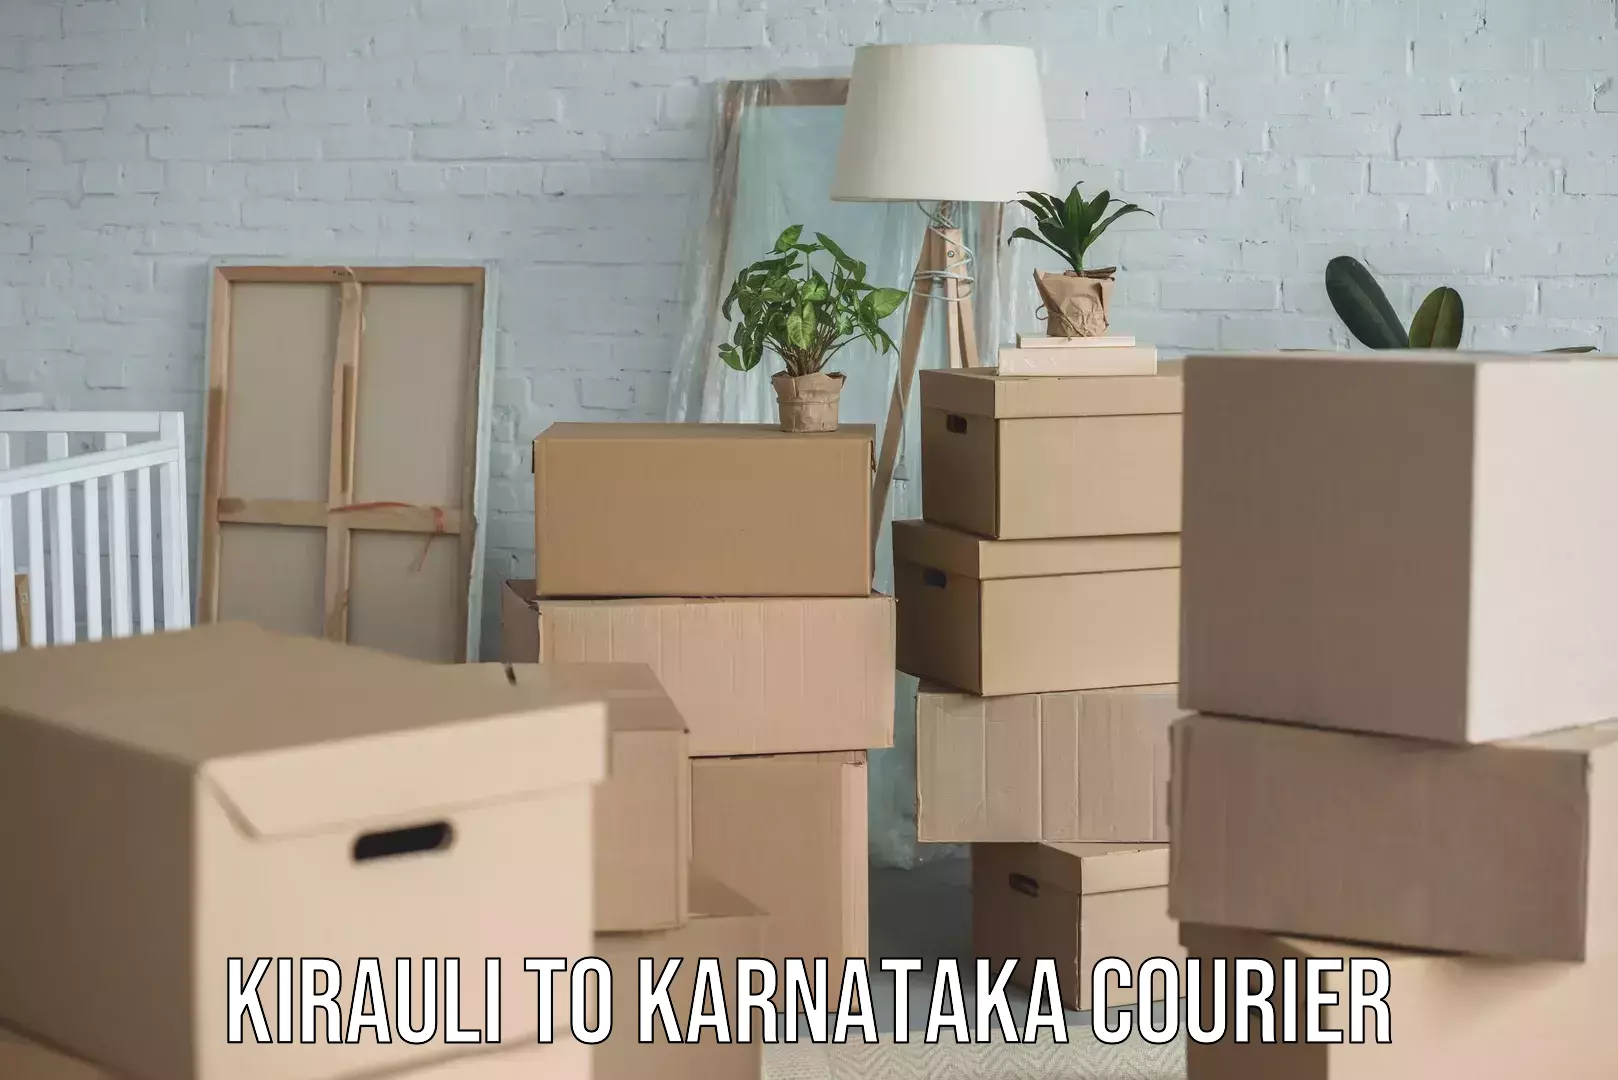 Specialized moving company Kirauli to Karnataka